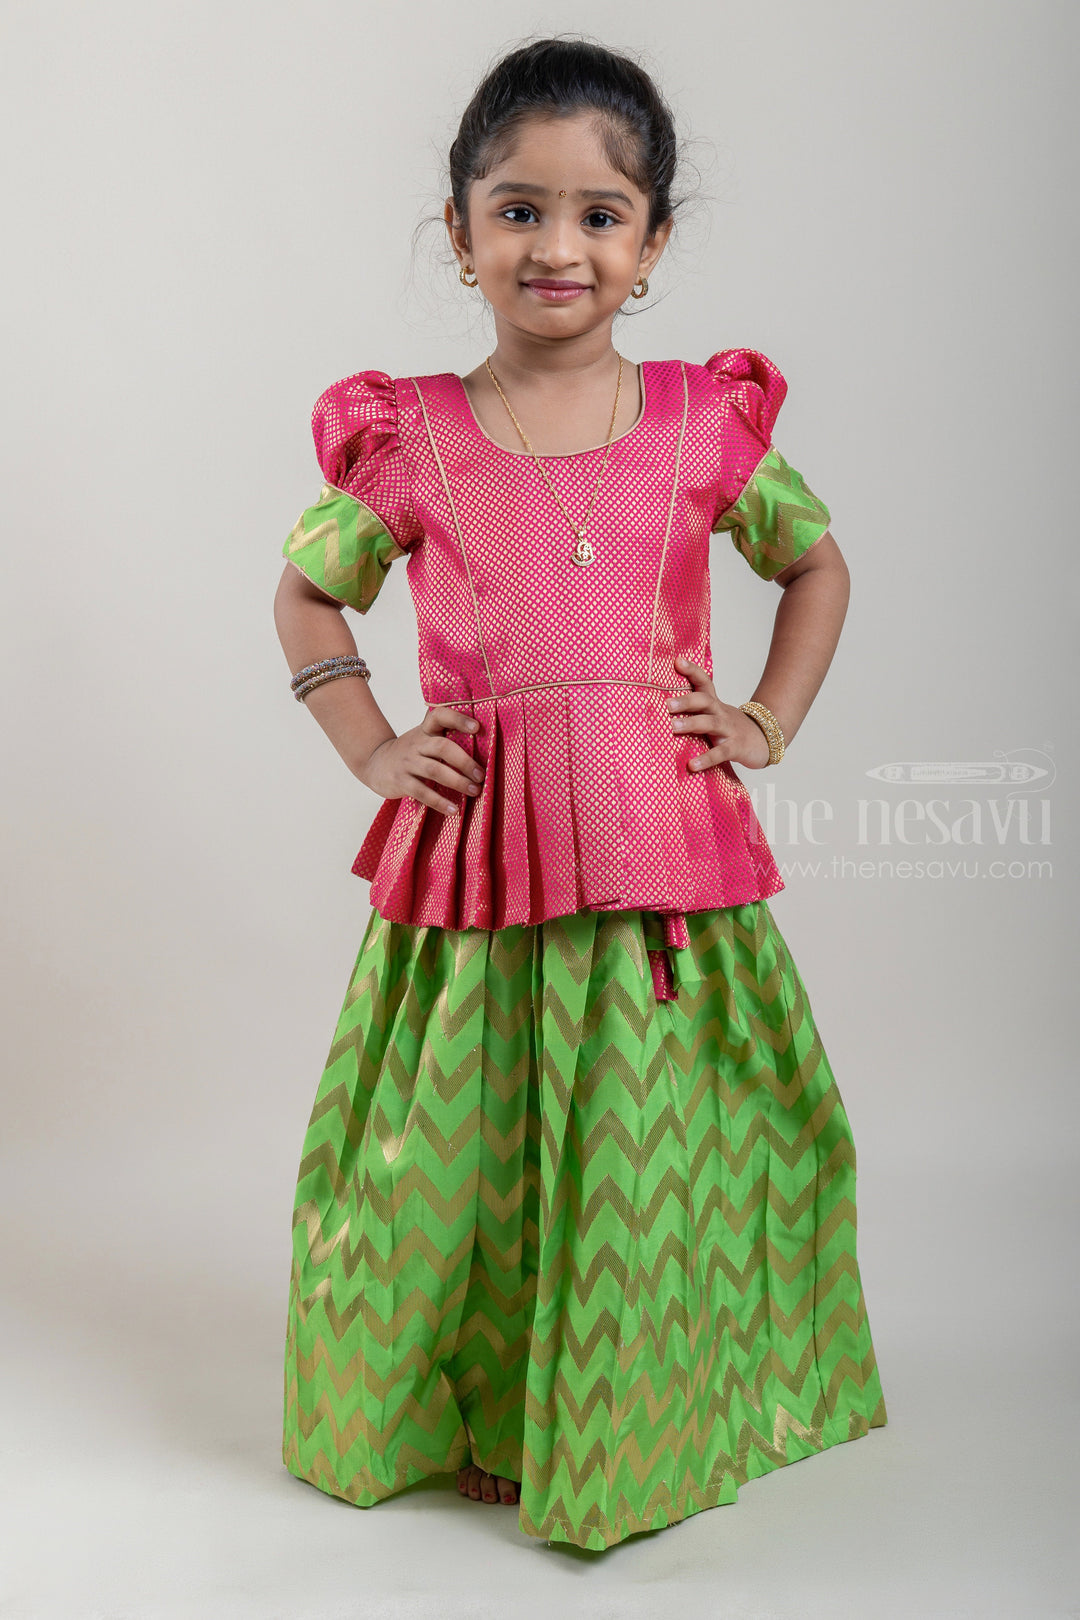 The Nesavu Pattu Pavadai Traditional Pink Brocade Designer Silk Blouse with Green Silk Skirt for Girls Nesavu 14 (6M) / Green / Jacquard GPP276B-14 Ethnic Pink Brocade Silk Blouse with Green Silk Skirt | Traditional Pattu Pavadai |The Nesavu